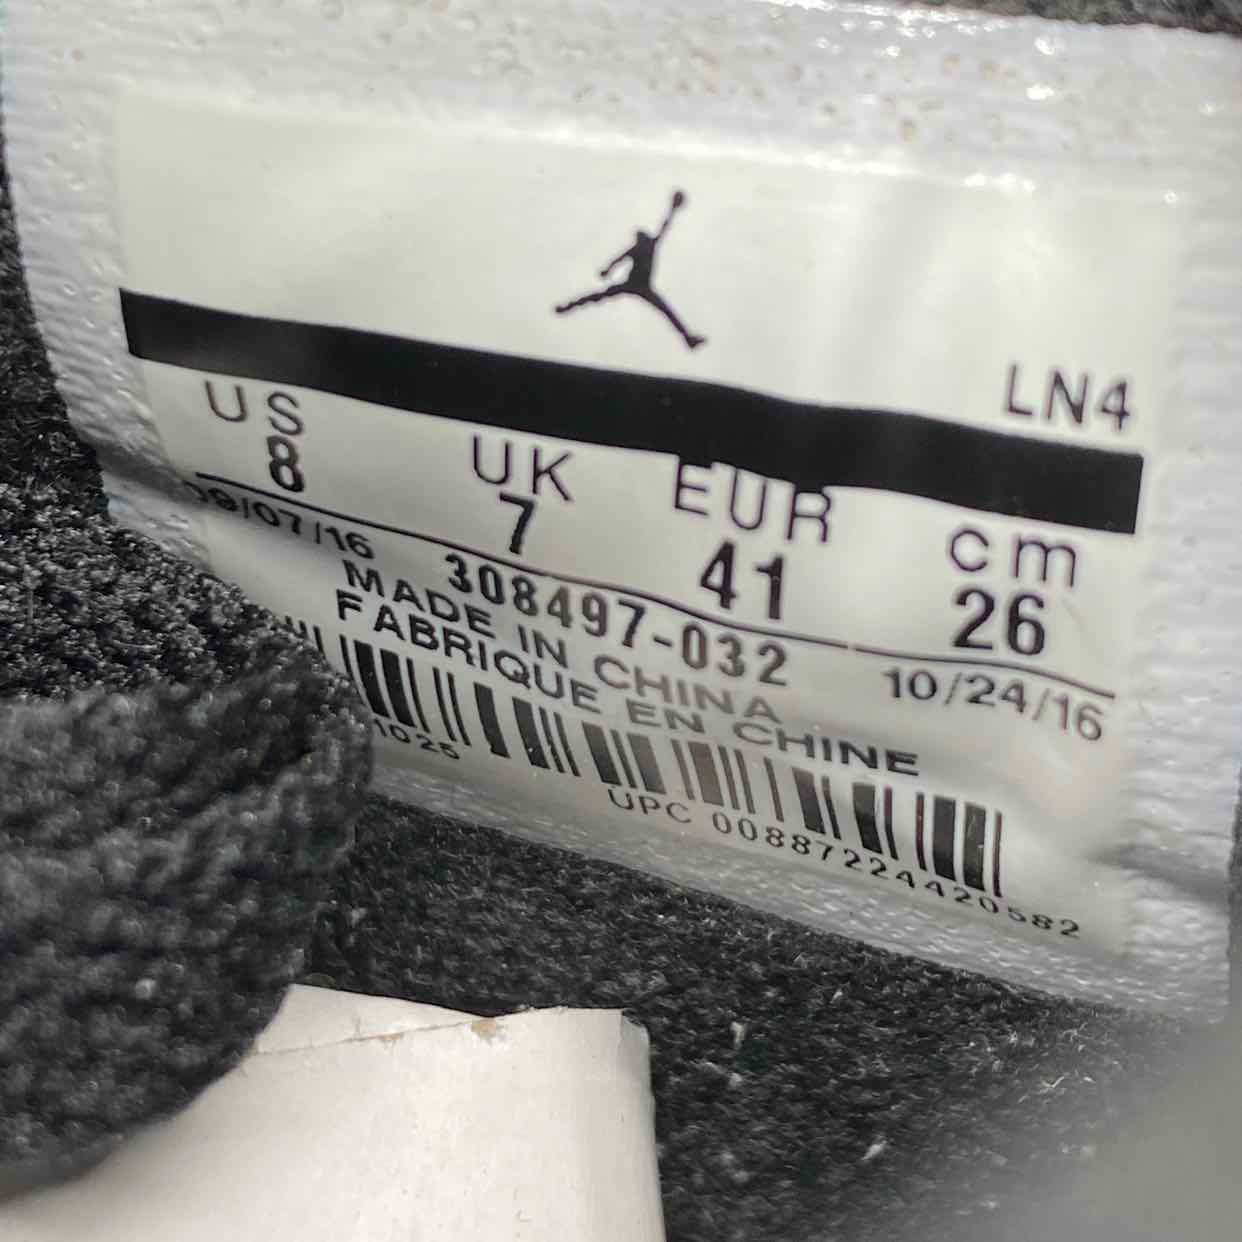 Air Jordan 4 Retro &quot;Royalty&quot; 2017 Used Size 8